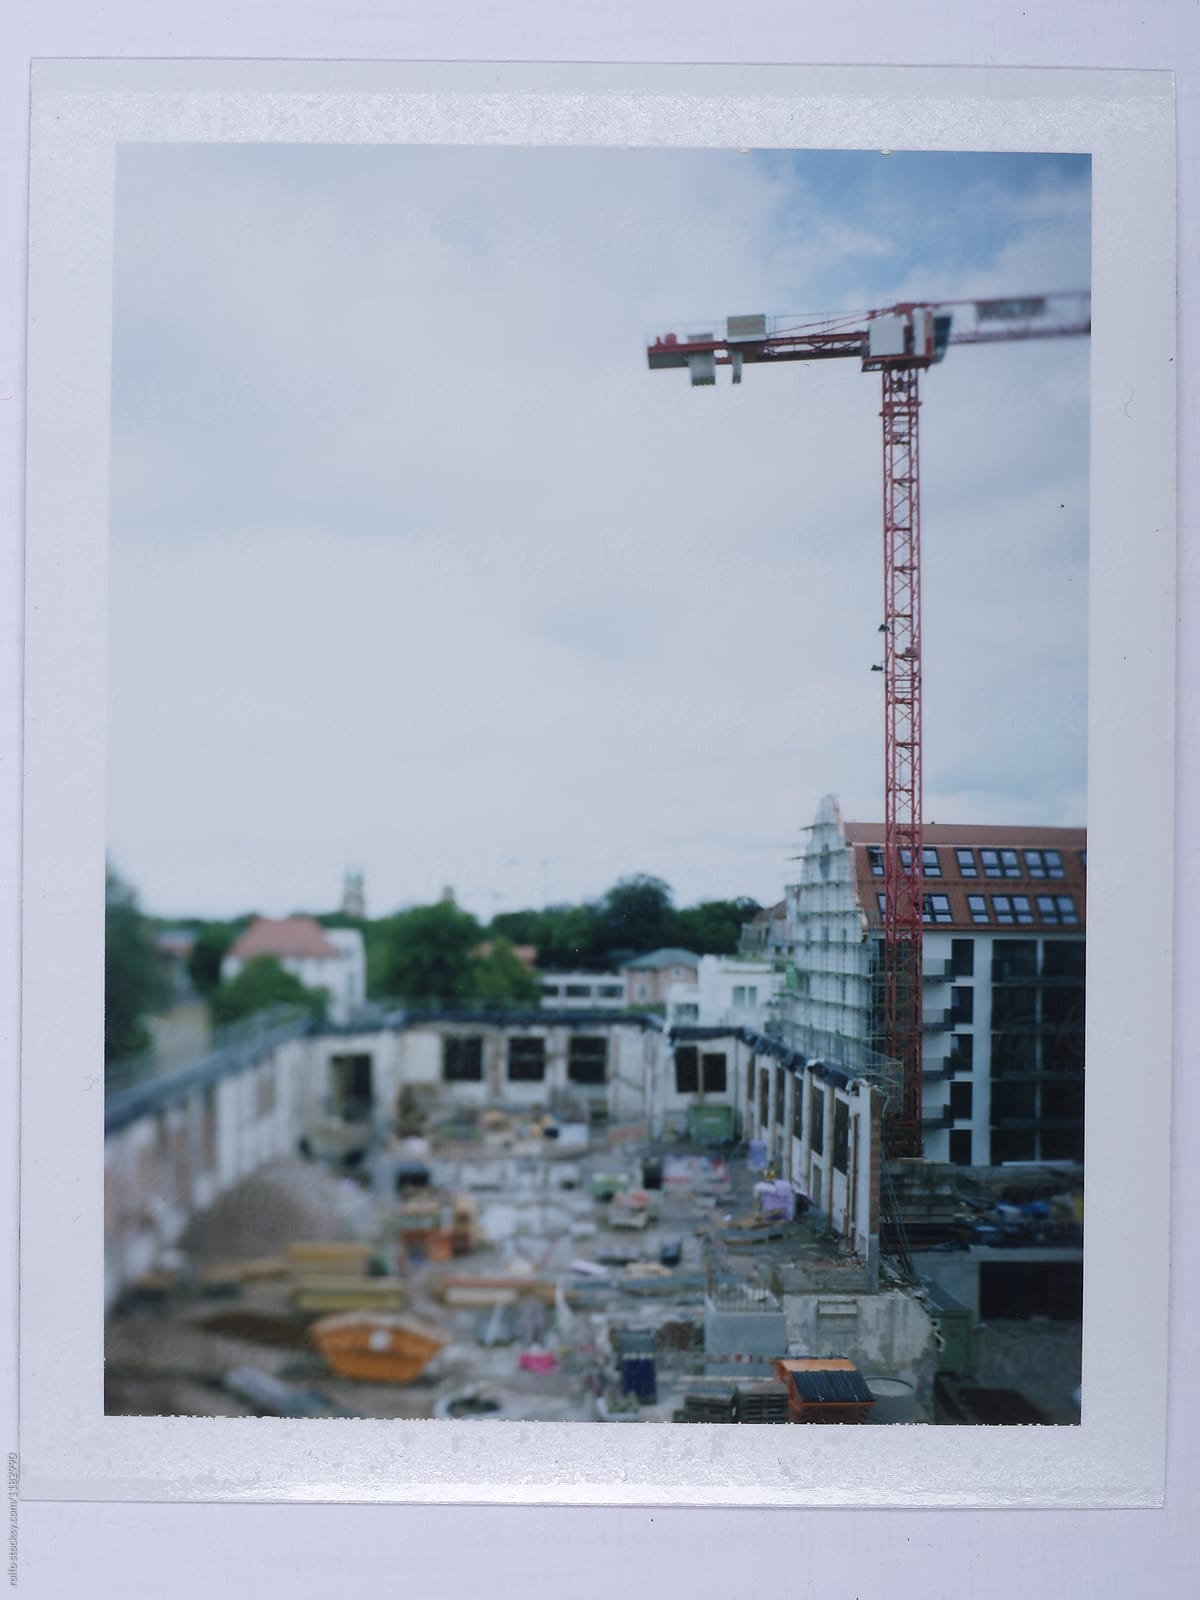 Polaroid image of crane in Kempten